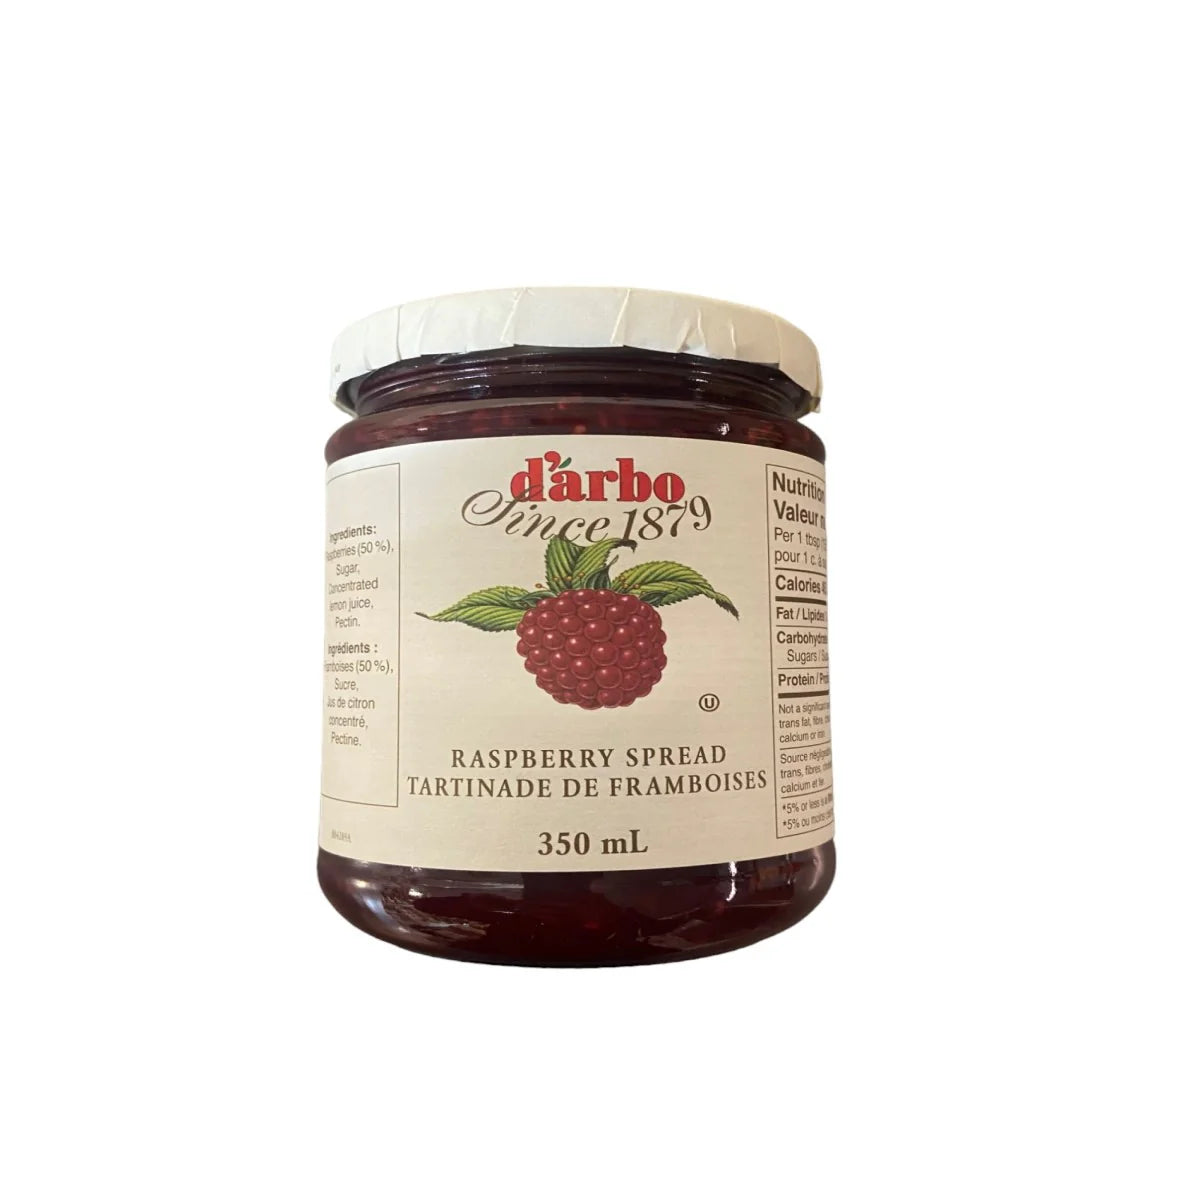 Darbo Raspberry Spread (350ml)